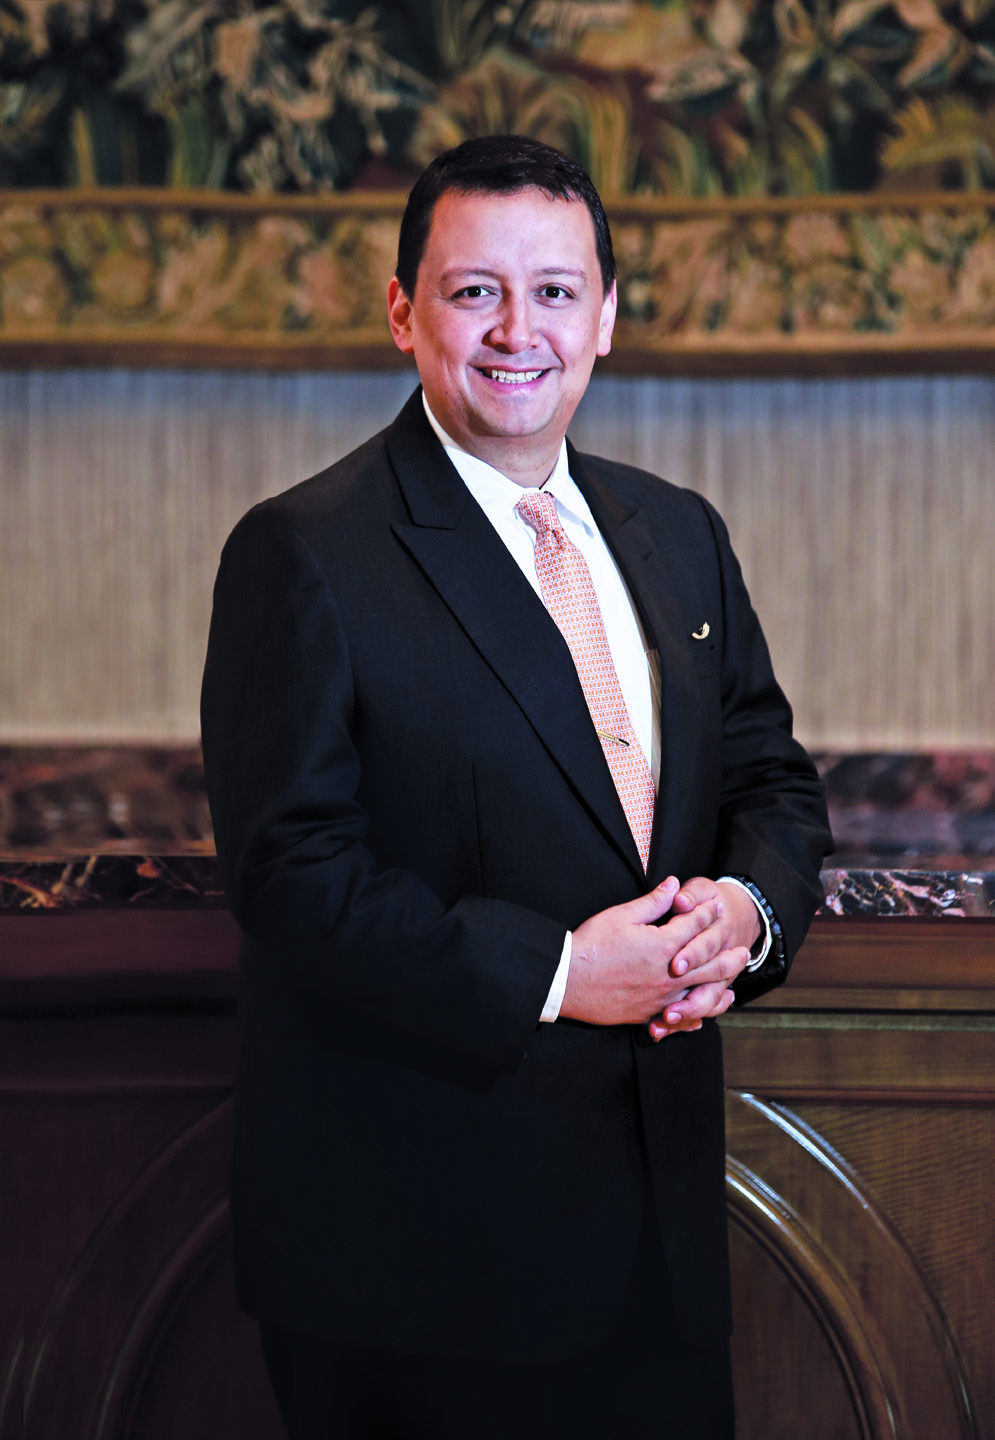 From Chef to Premier Hotelier: David Pardo de Ayala